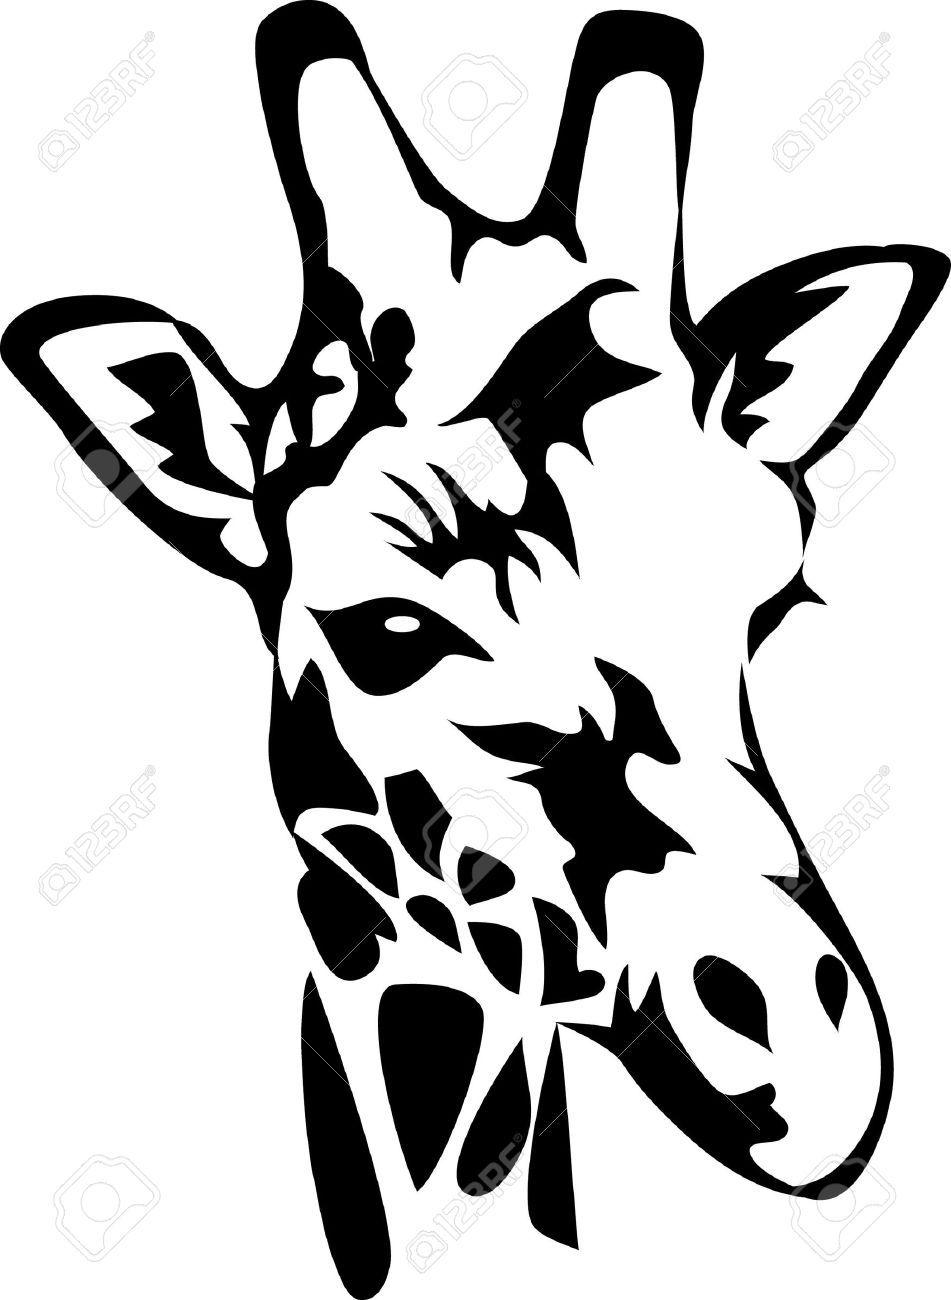 Giraffe Face Logo - Giraffe Face Drawing.com. Free for personal use